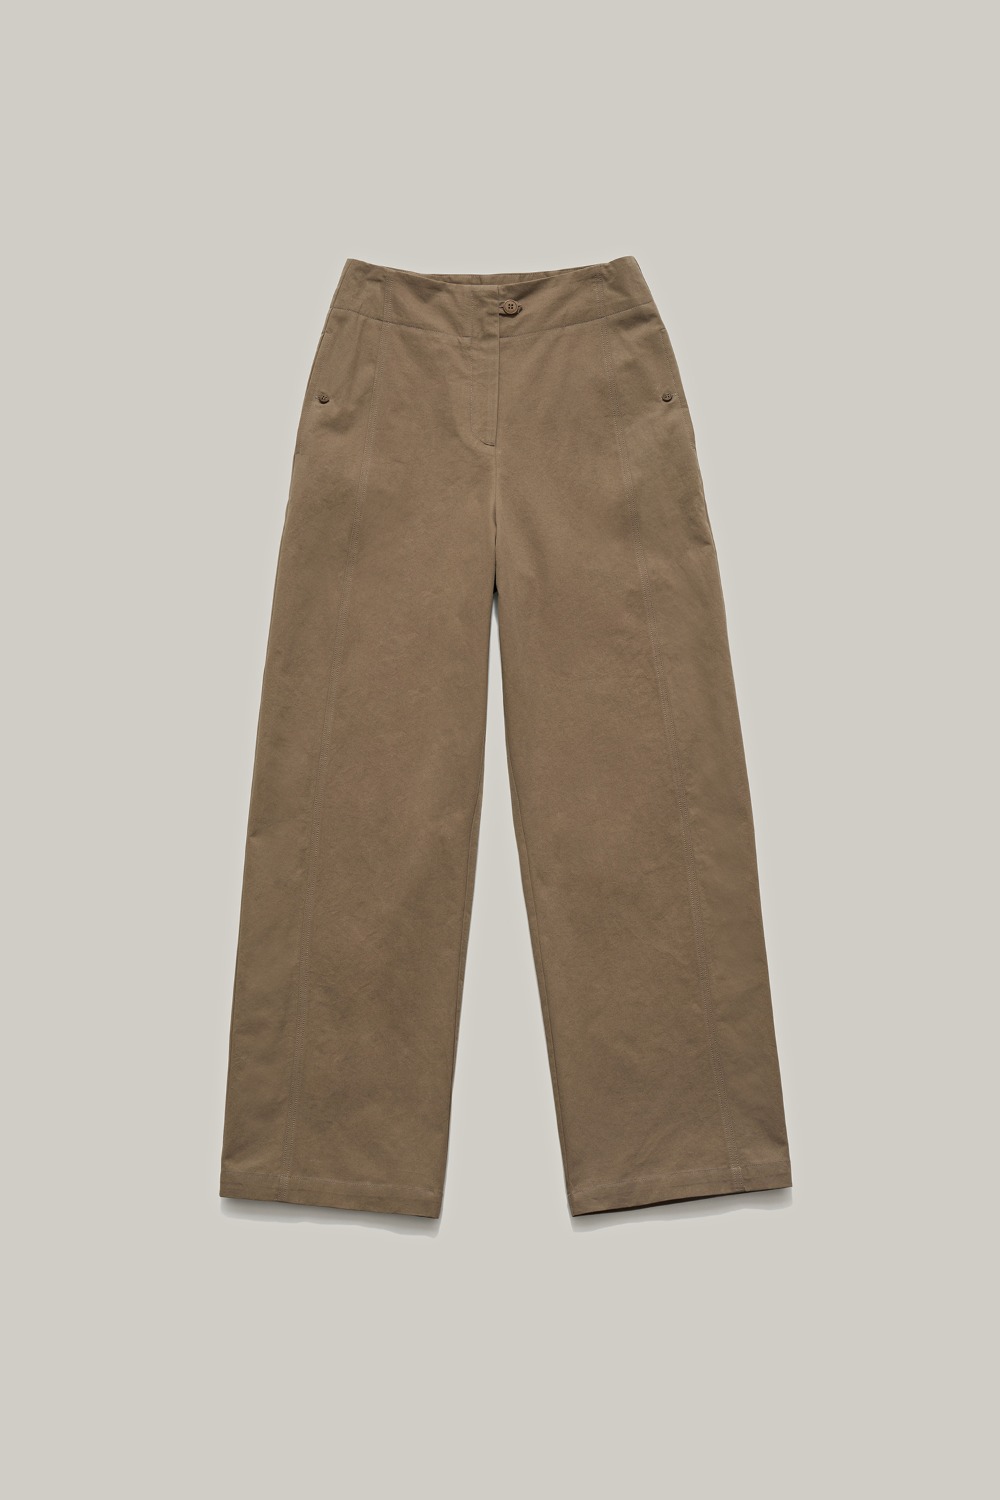 2th/Chino pants (khaki)